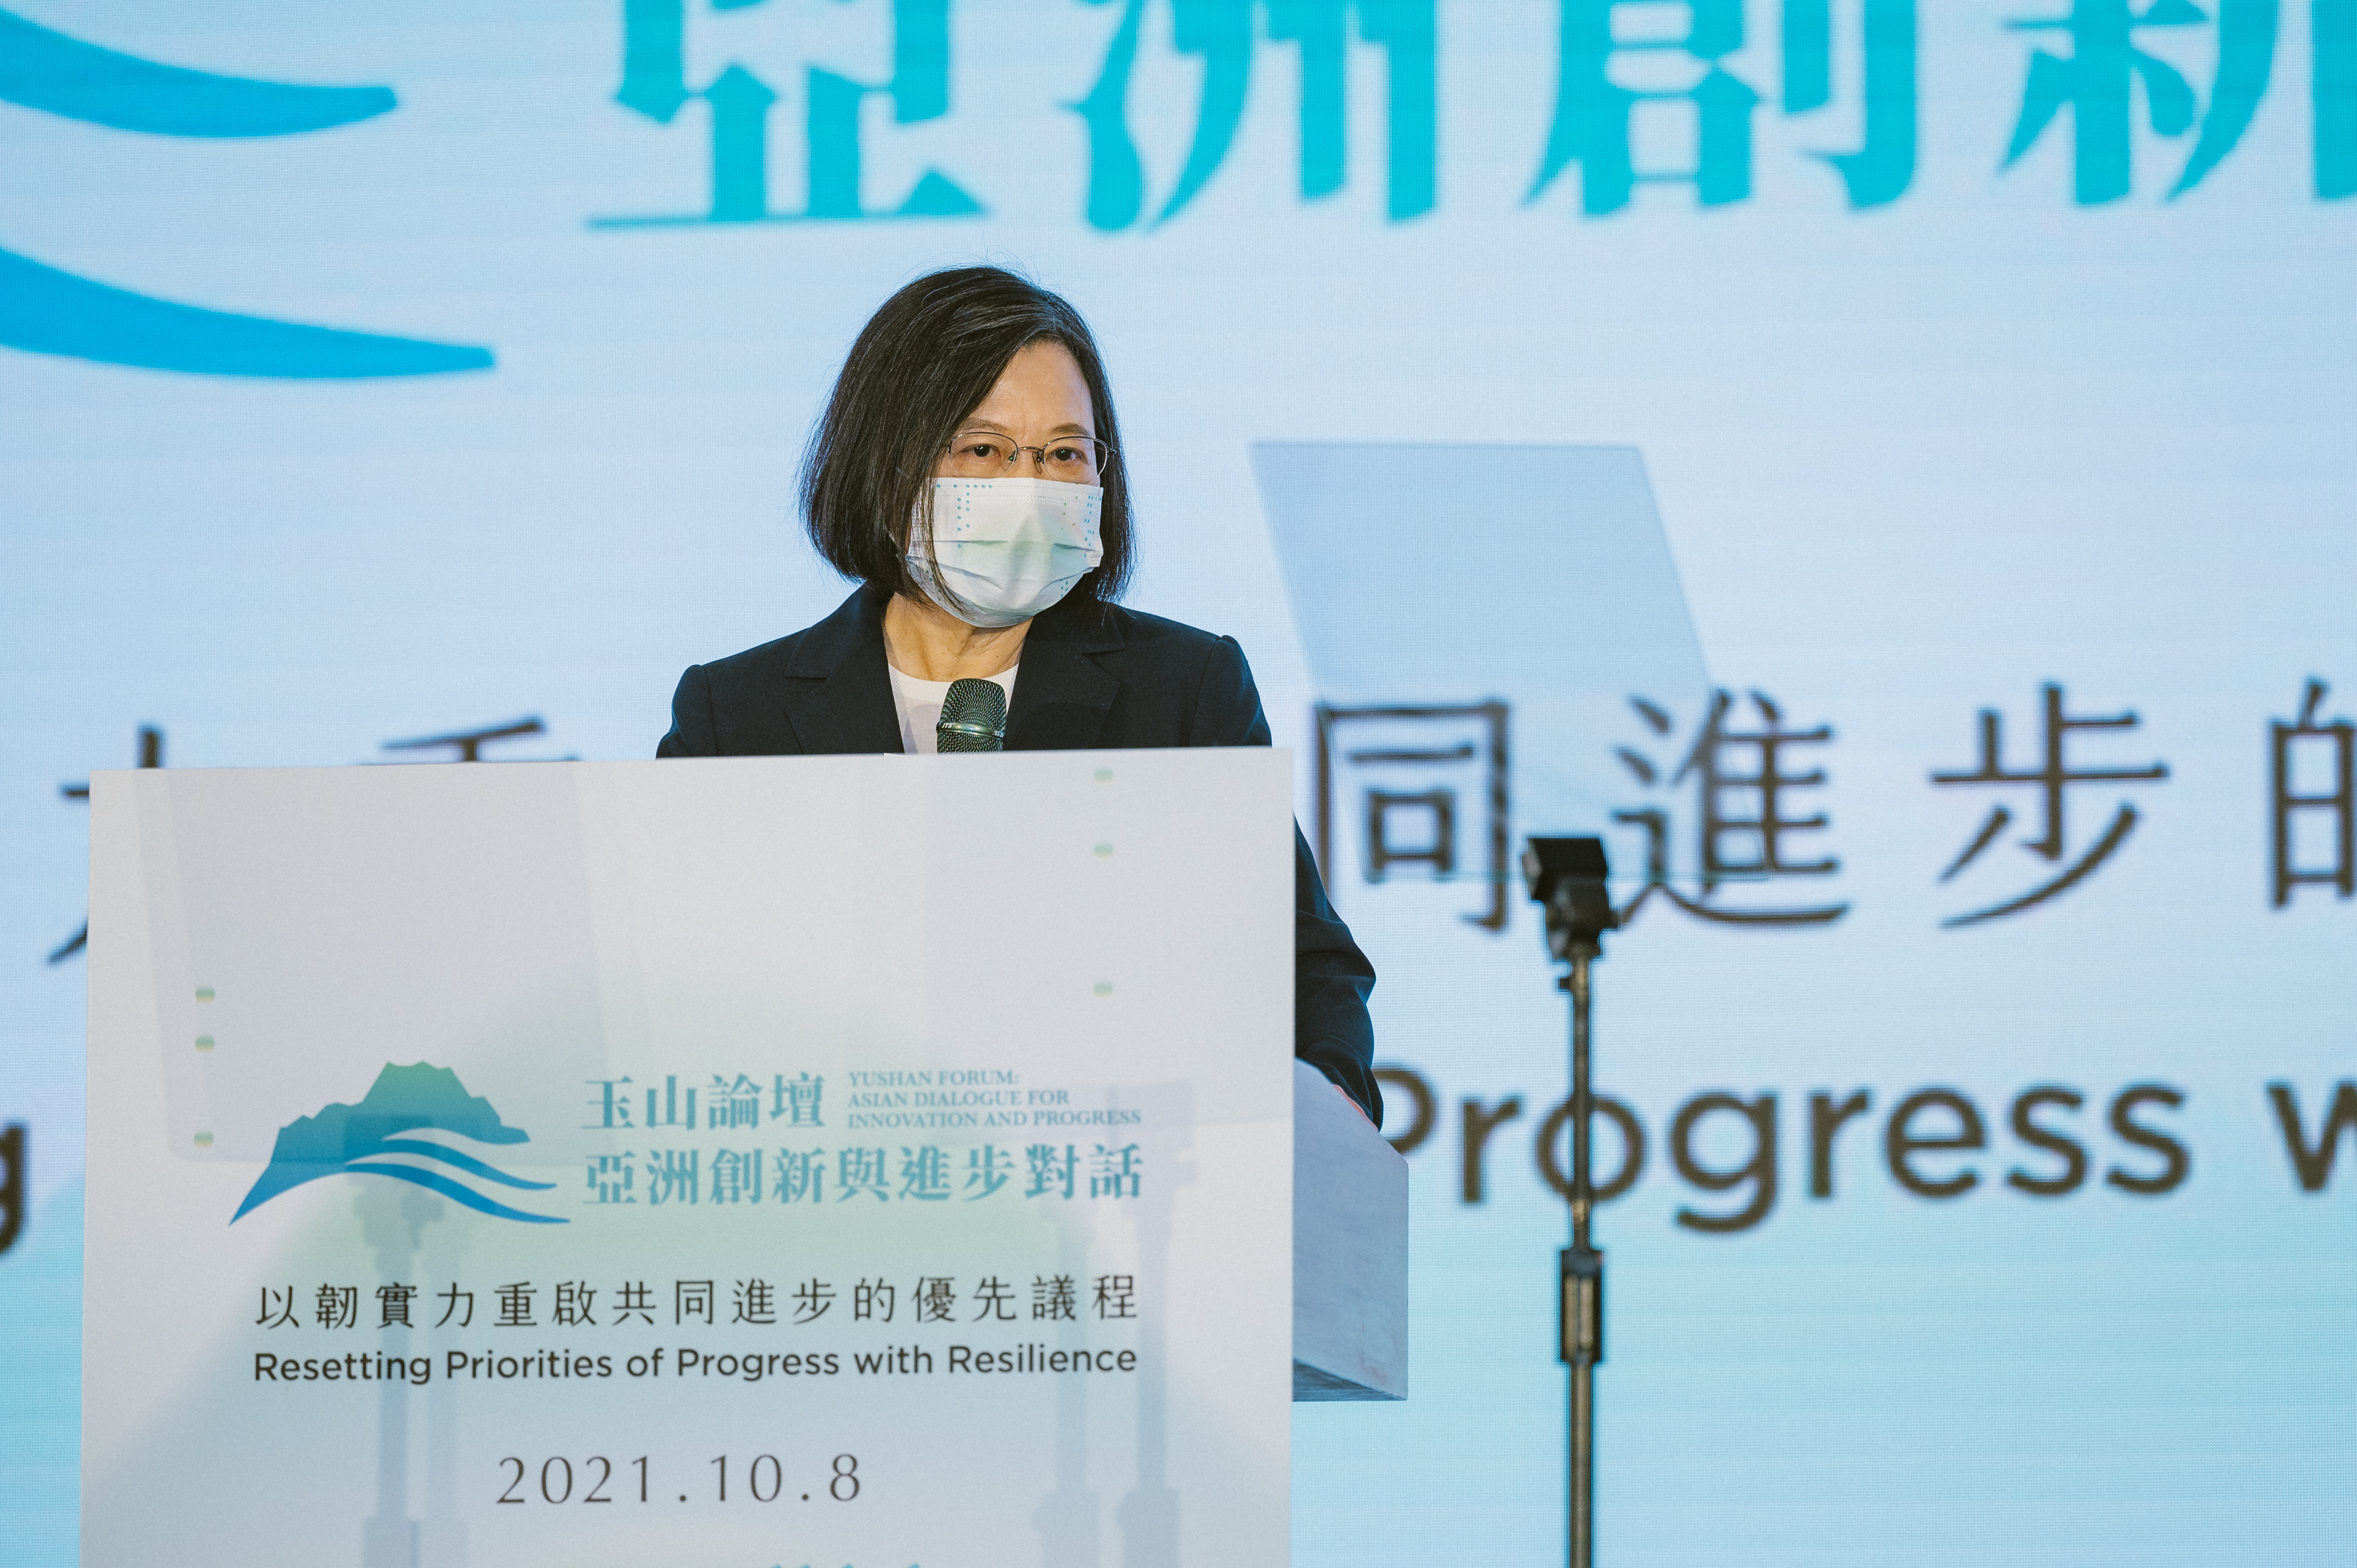 Opening remarks by President H.E. Tsai Ing-wen